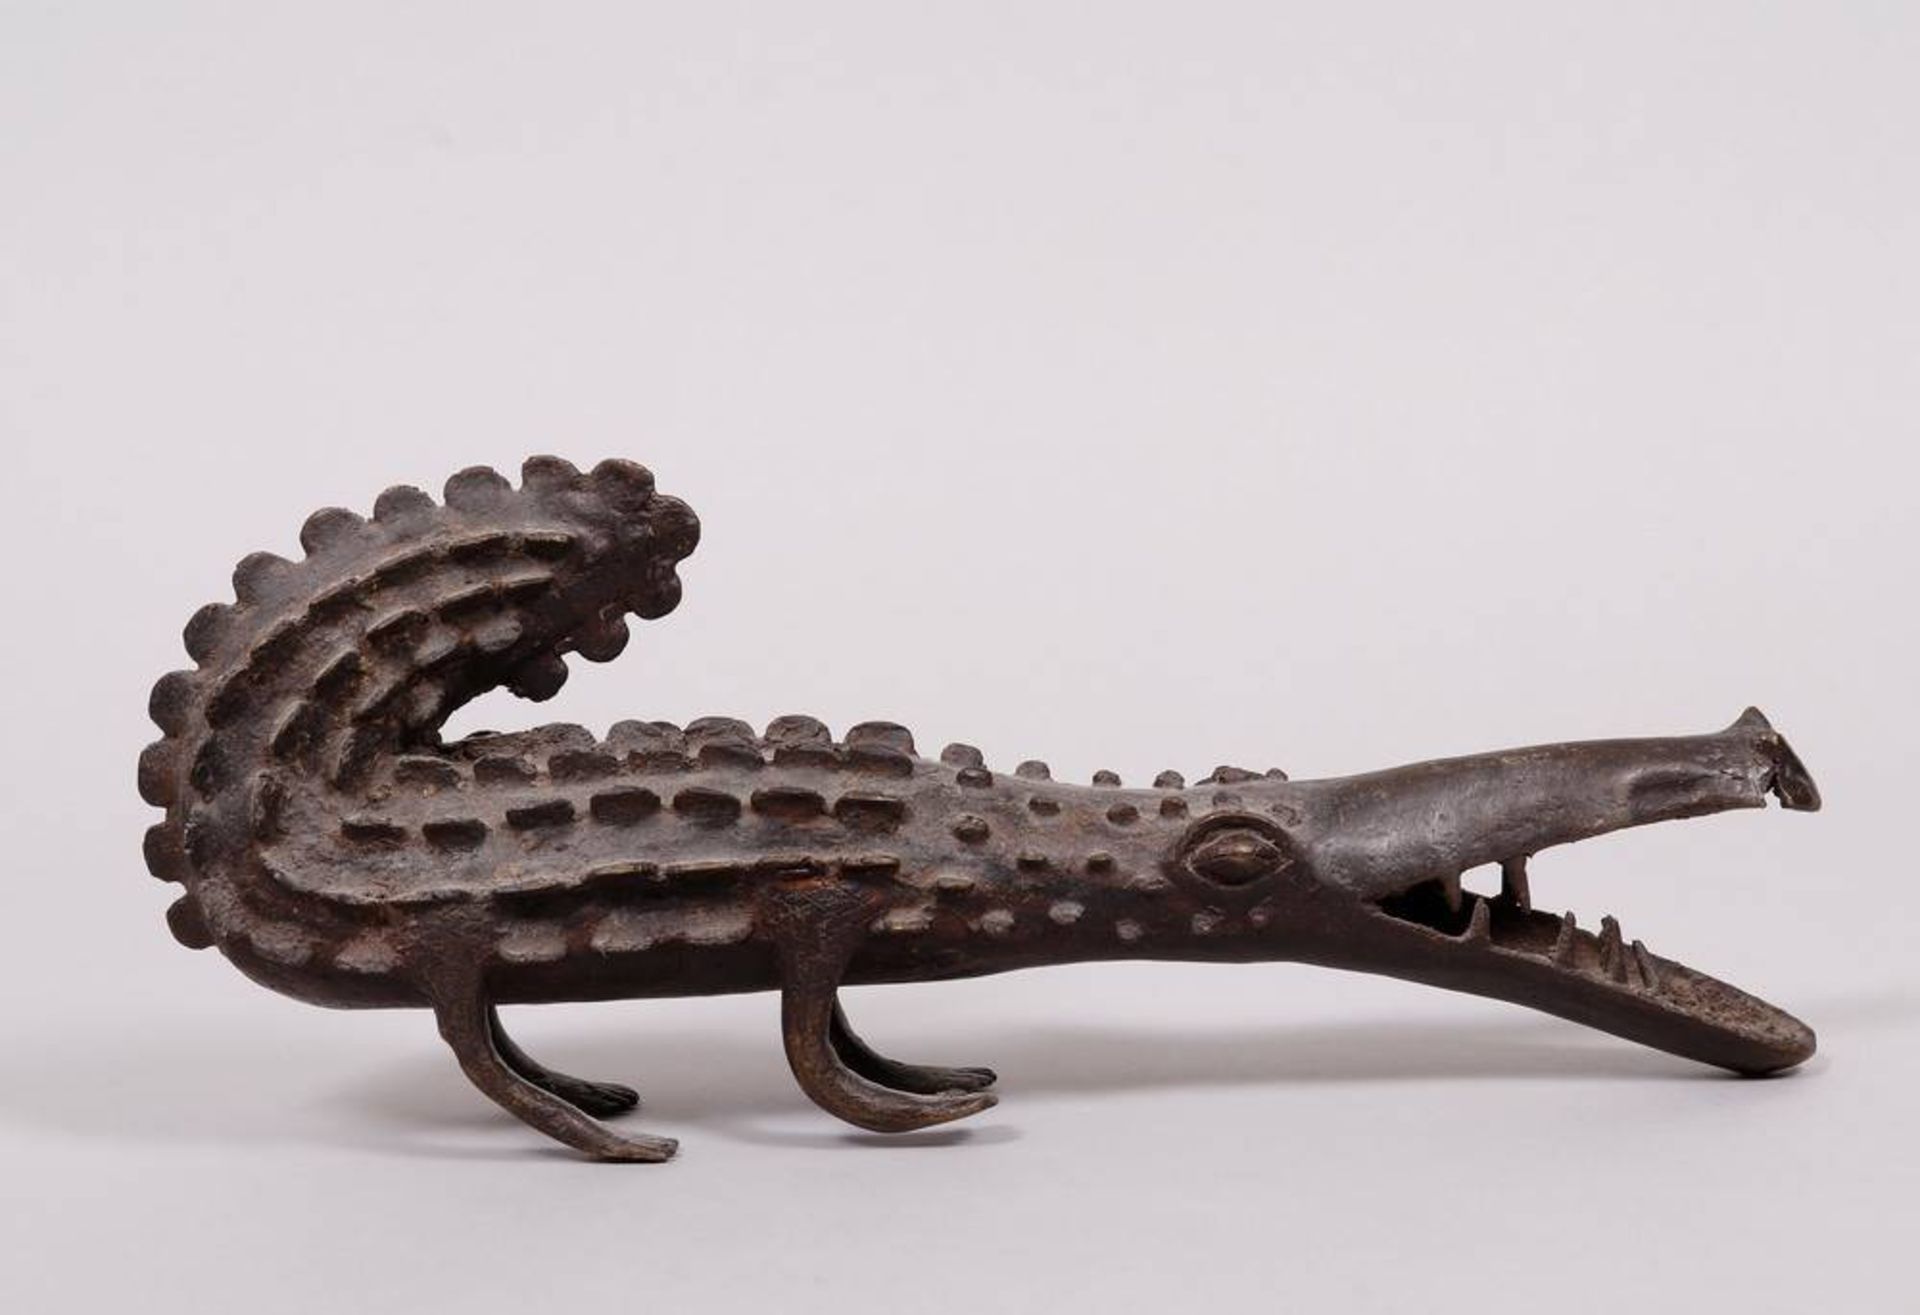 Crocodile, probably Burkina Faso, Africa - Image 3 of 4